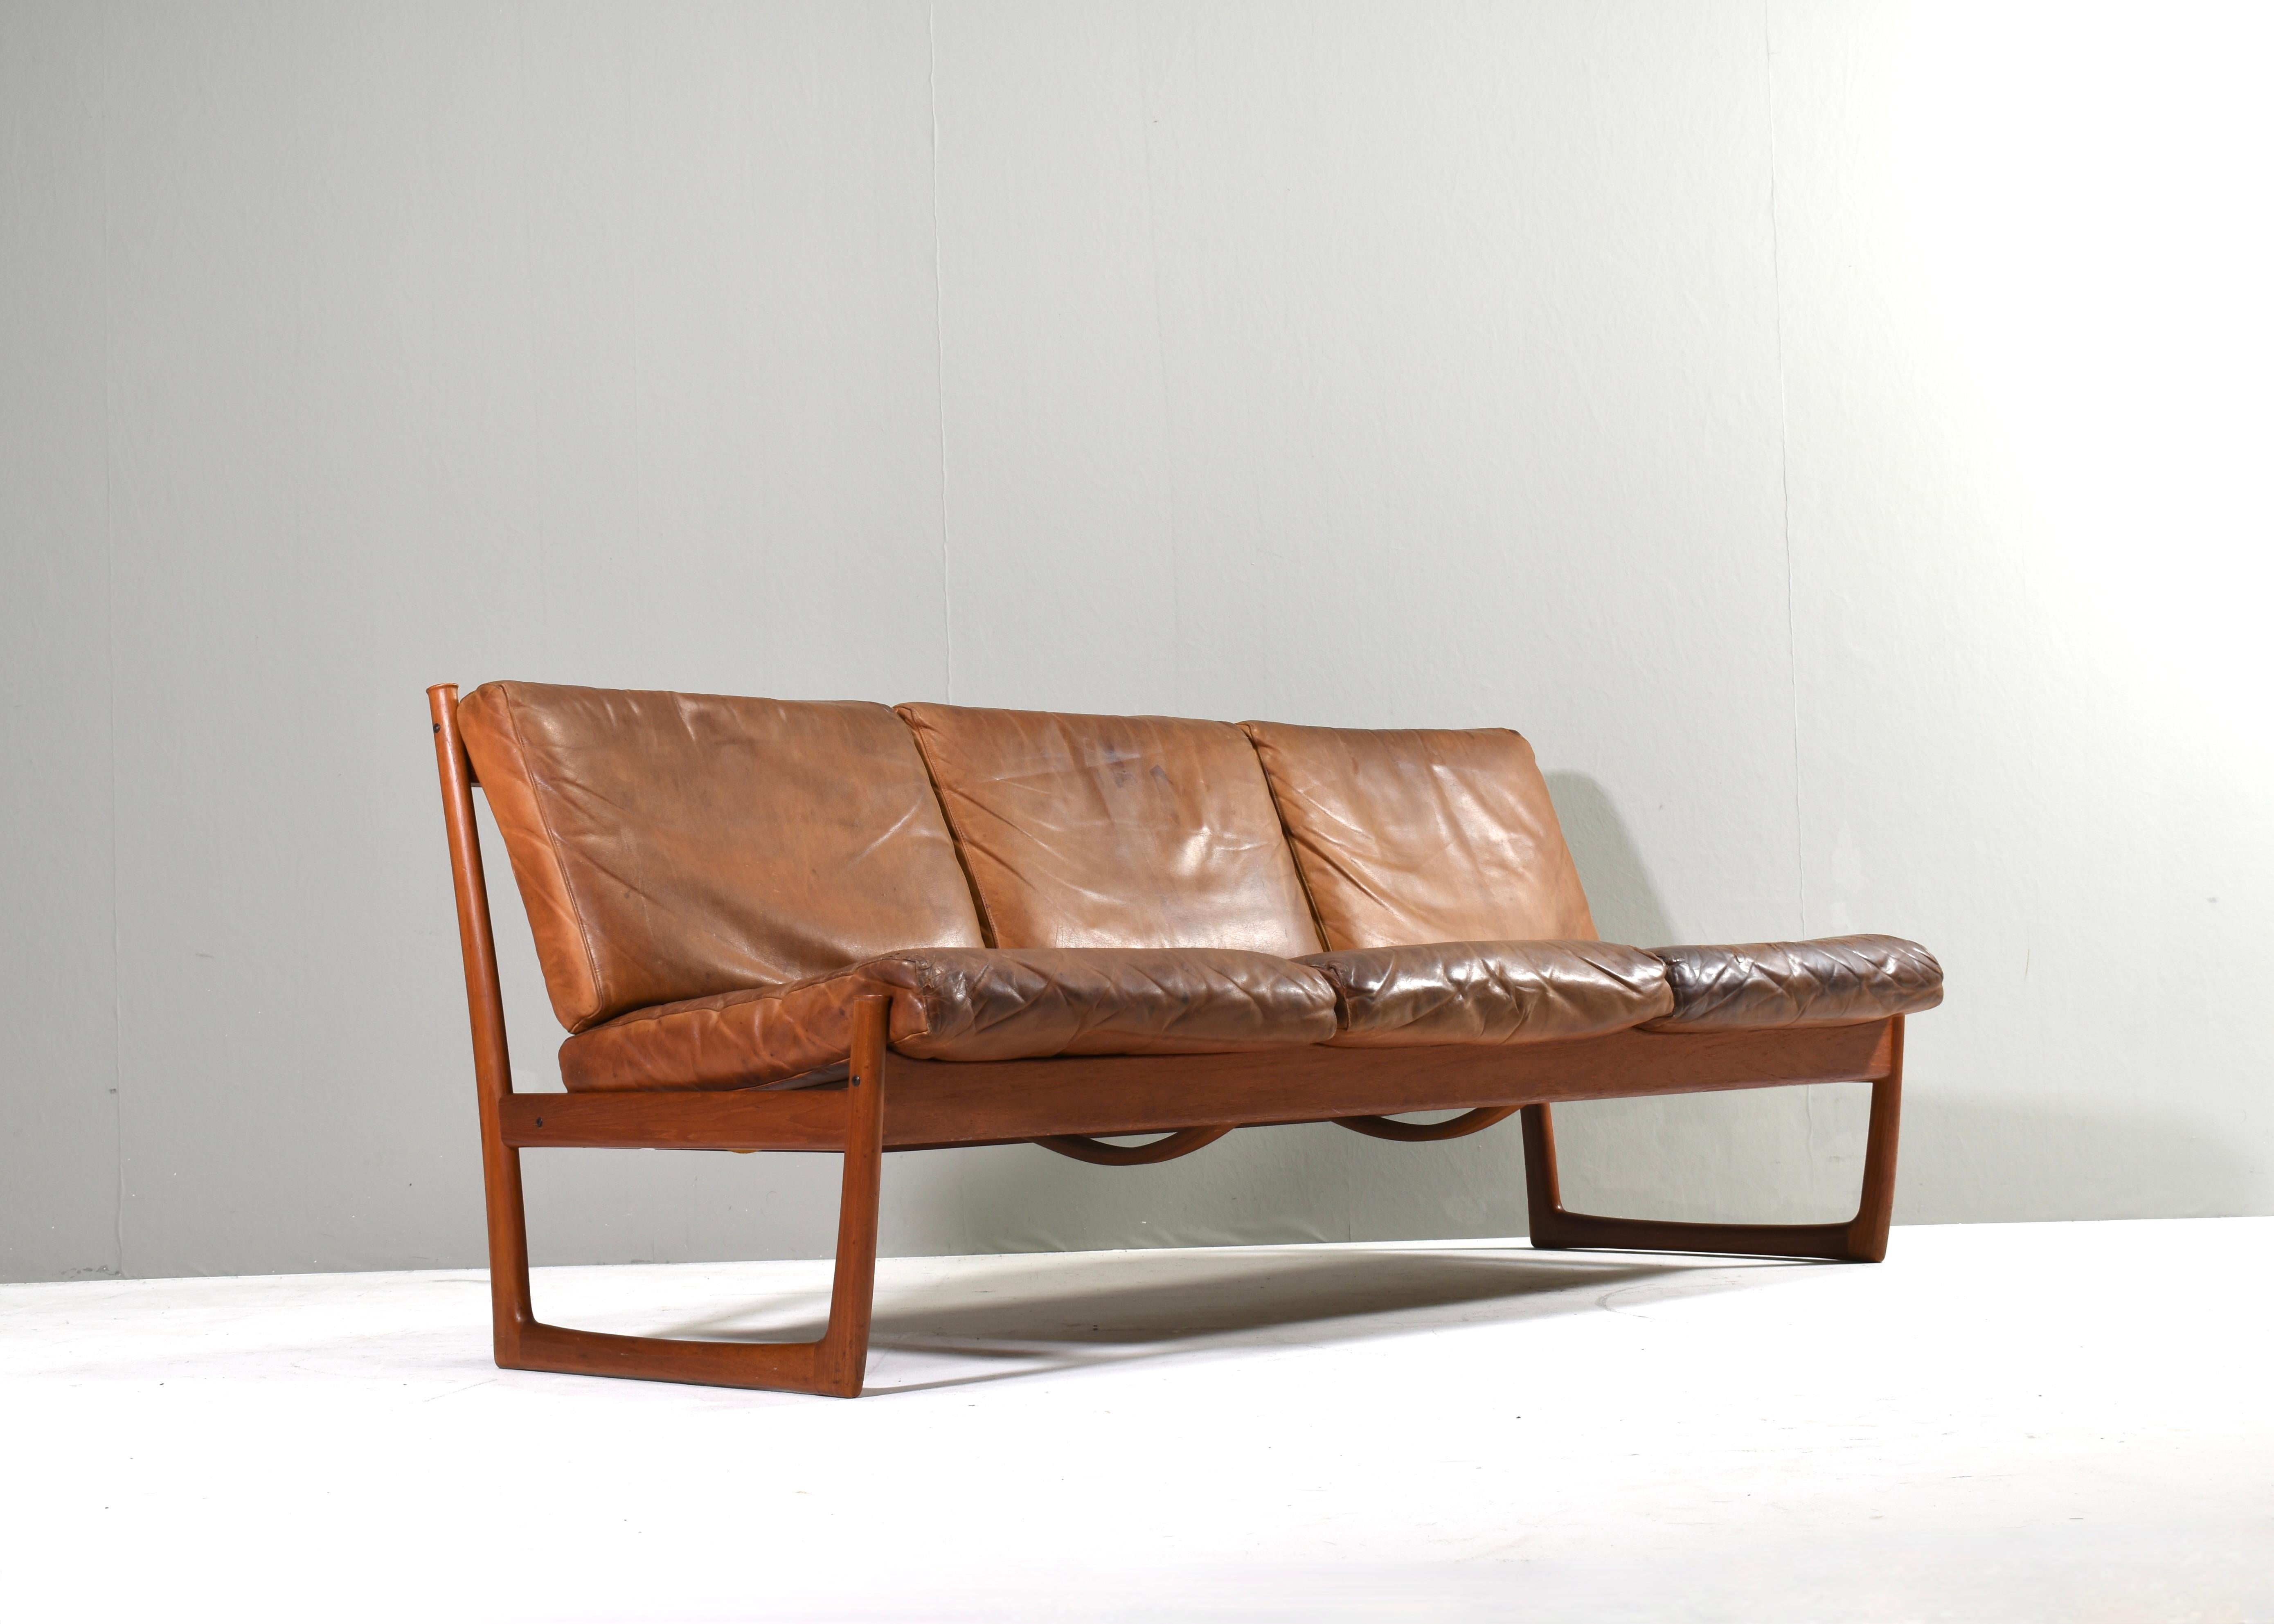 Peter Hvidt & Orla Mølgaard FD130 Teak sofa in Cognac Leather - Denmark, 1950's For Sale 1